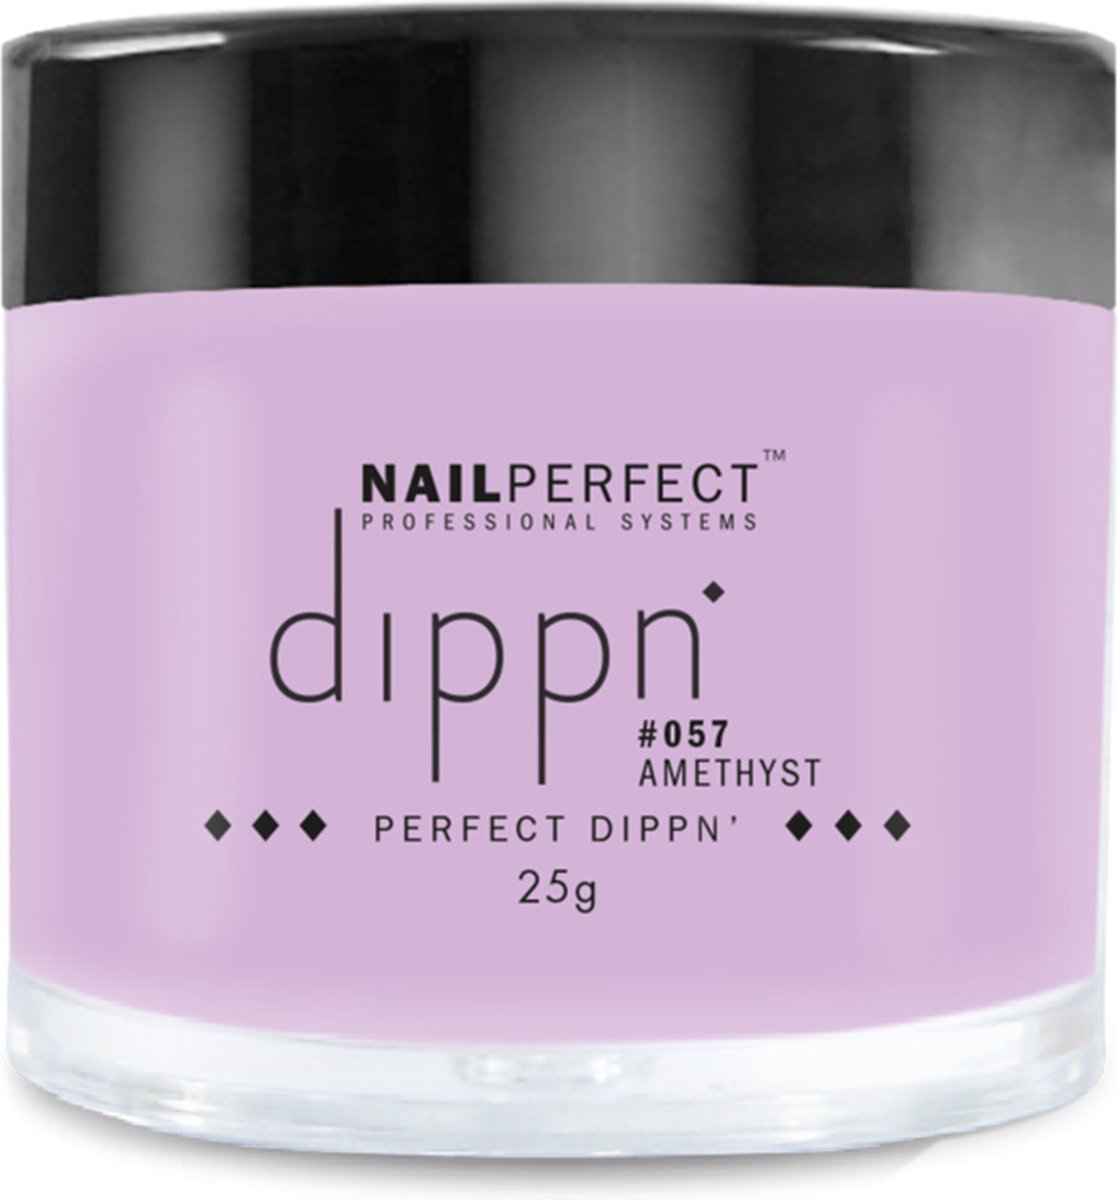 Nail Perfect - Drippn - #057 Amethyst - 25 gr